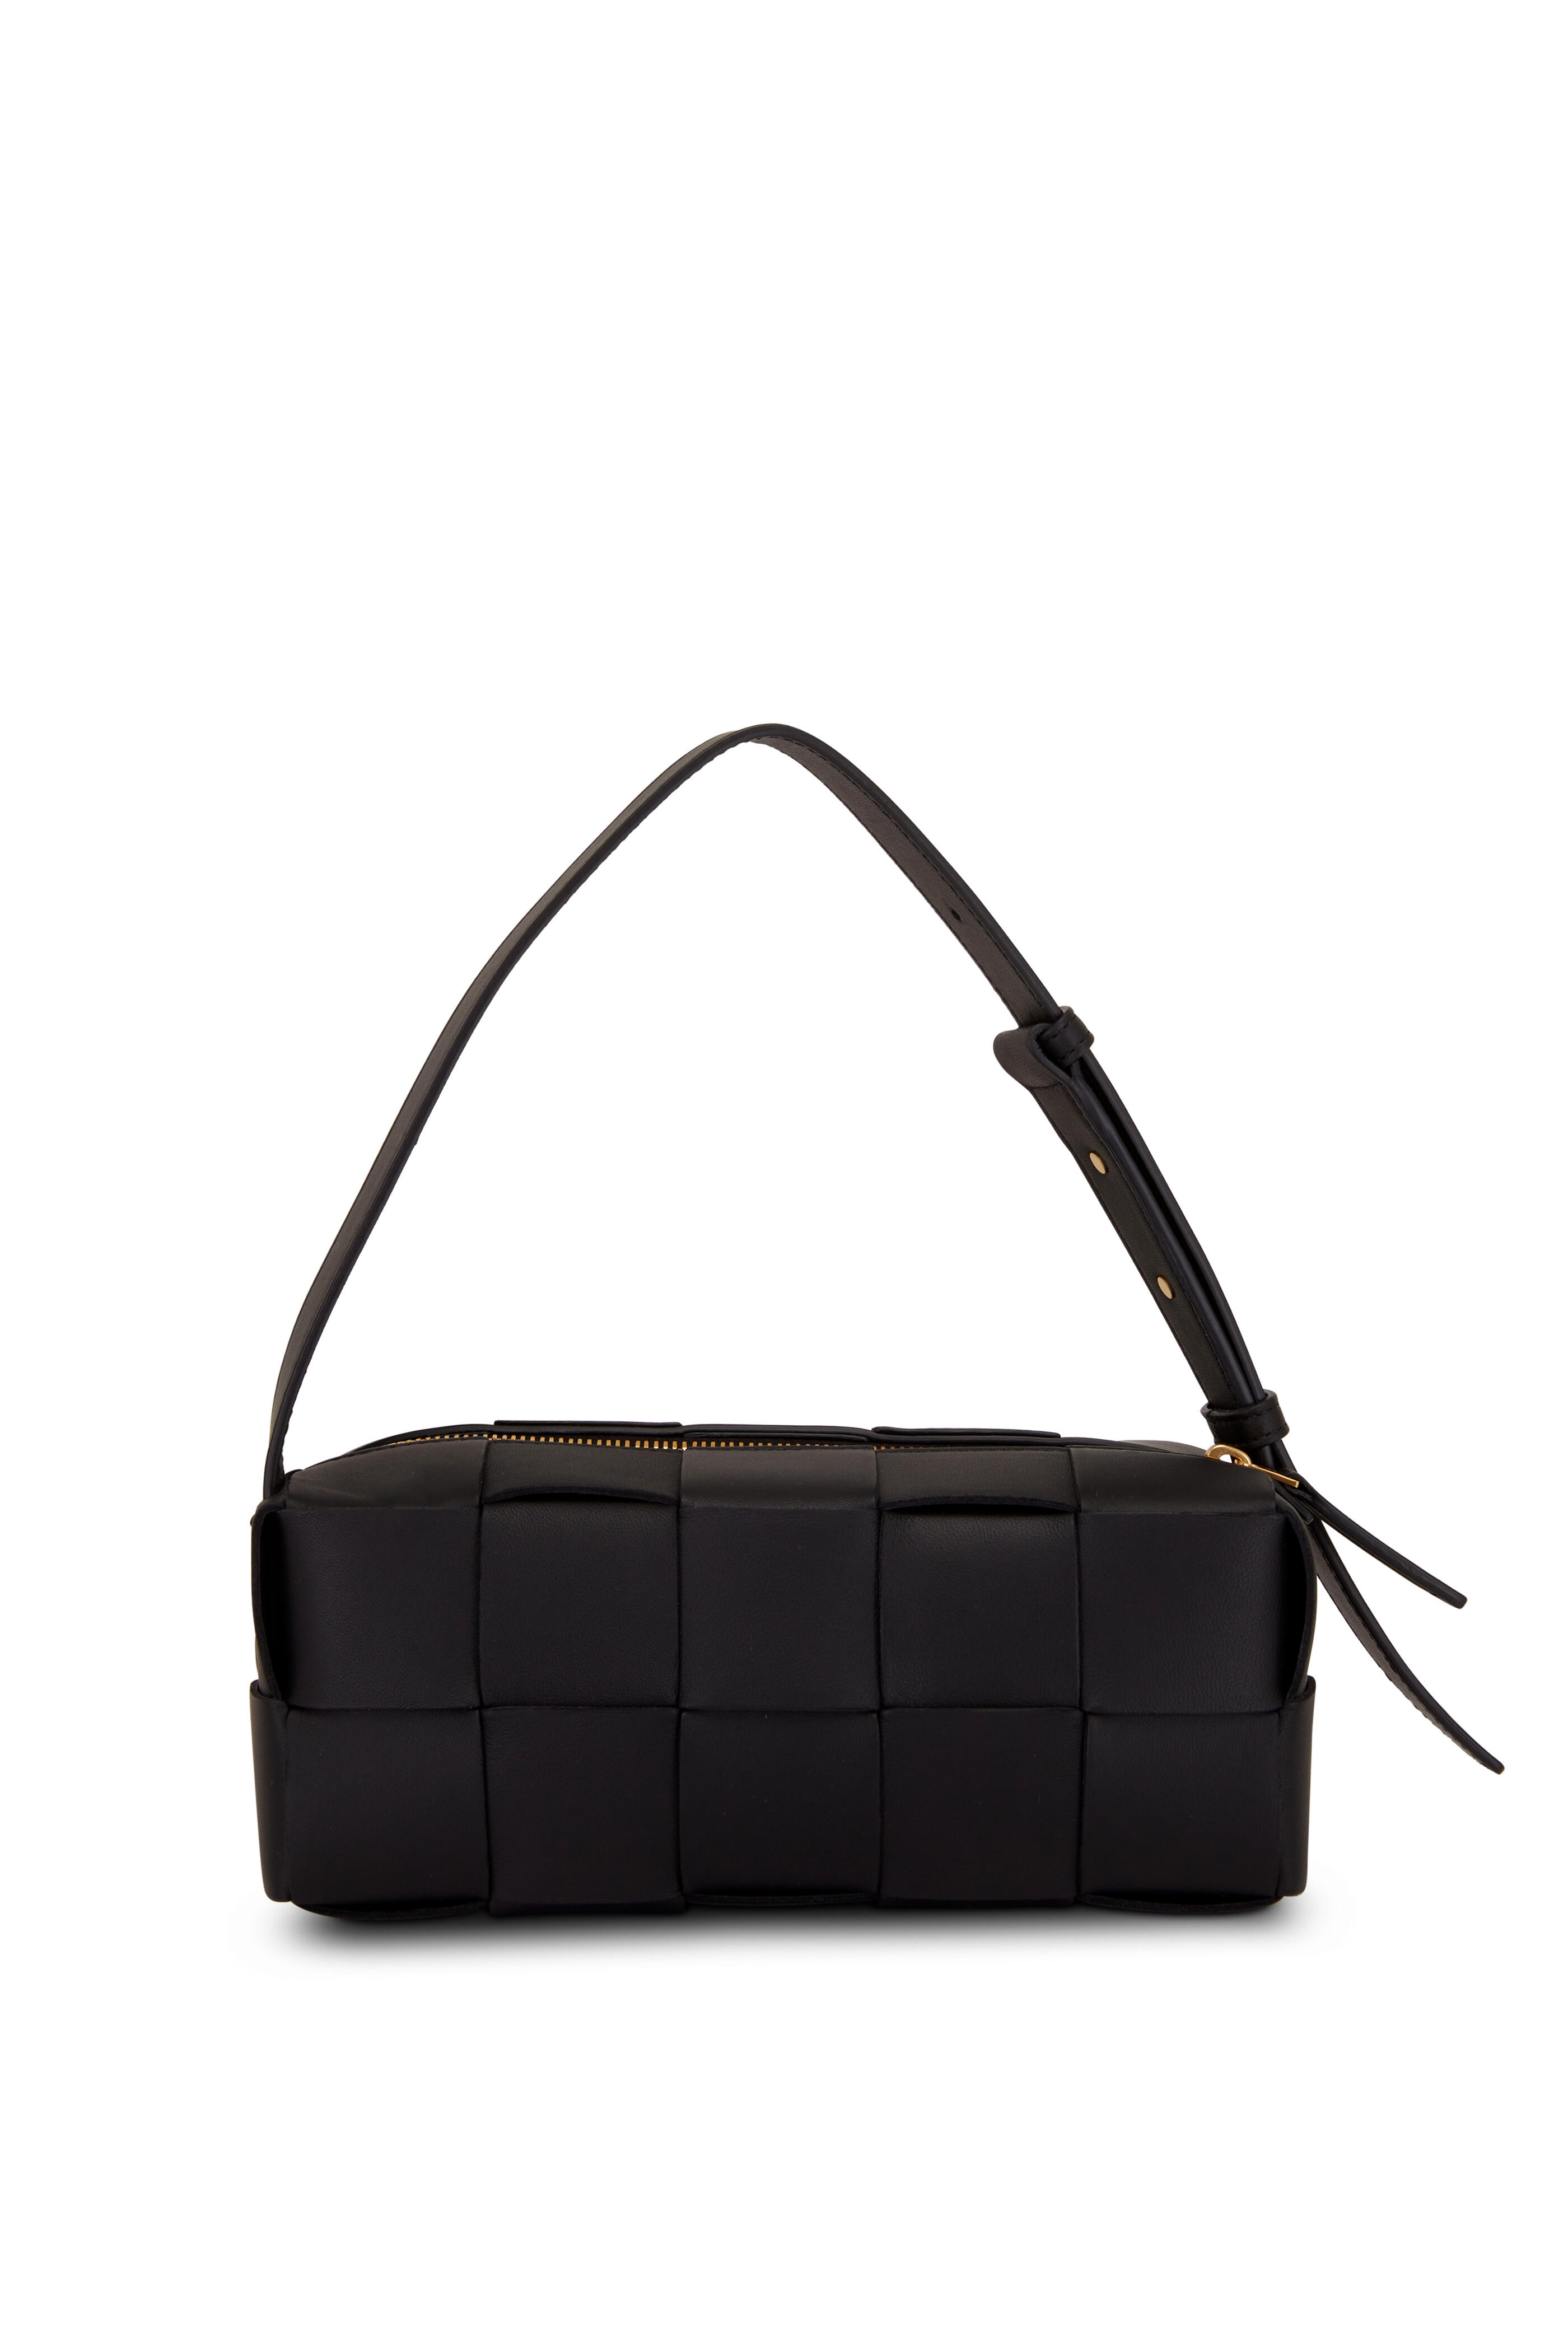 Bottega Veneta Brick Intrecciato Leather Shoulder Bag